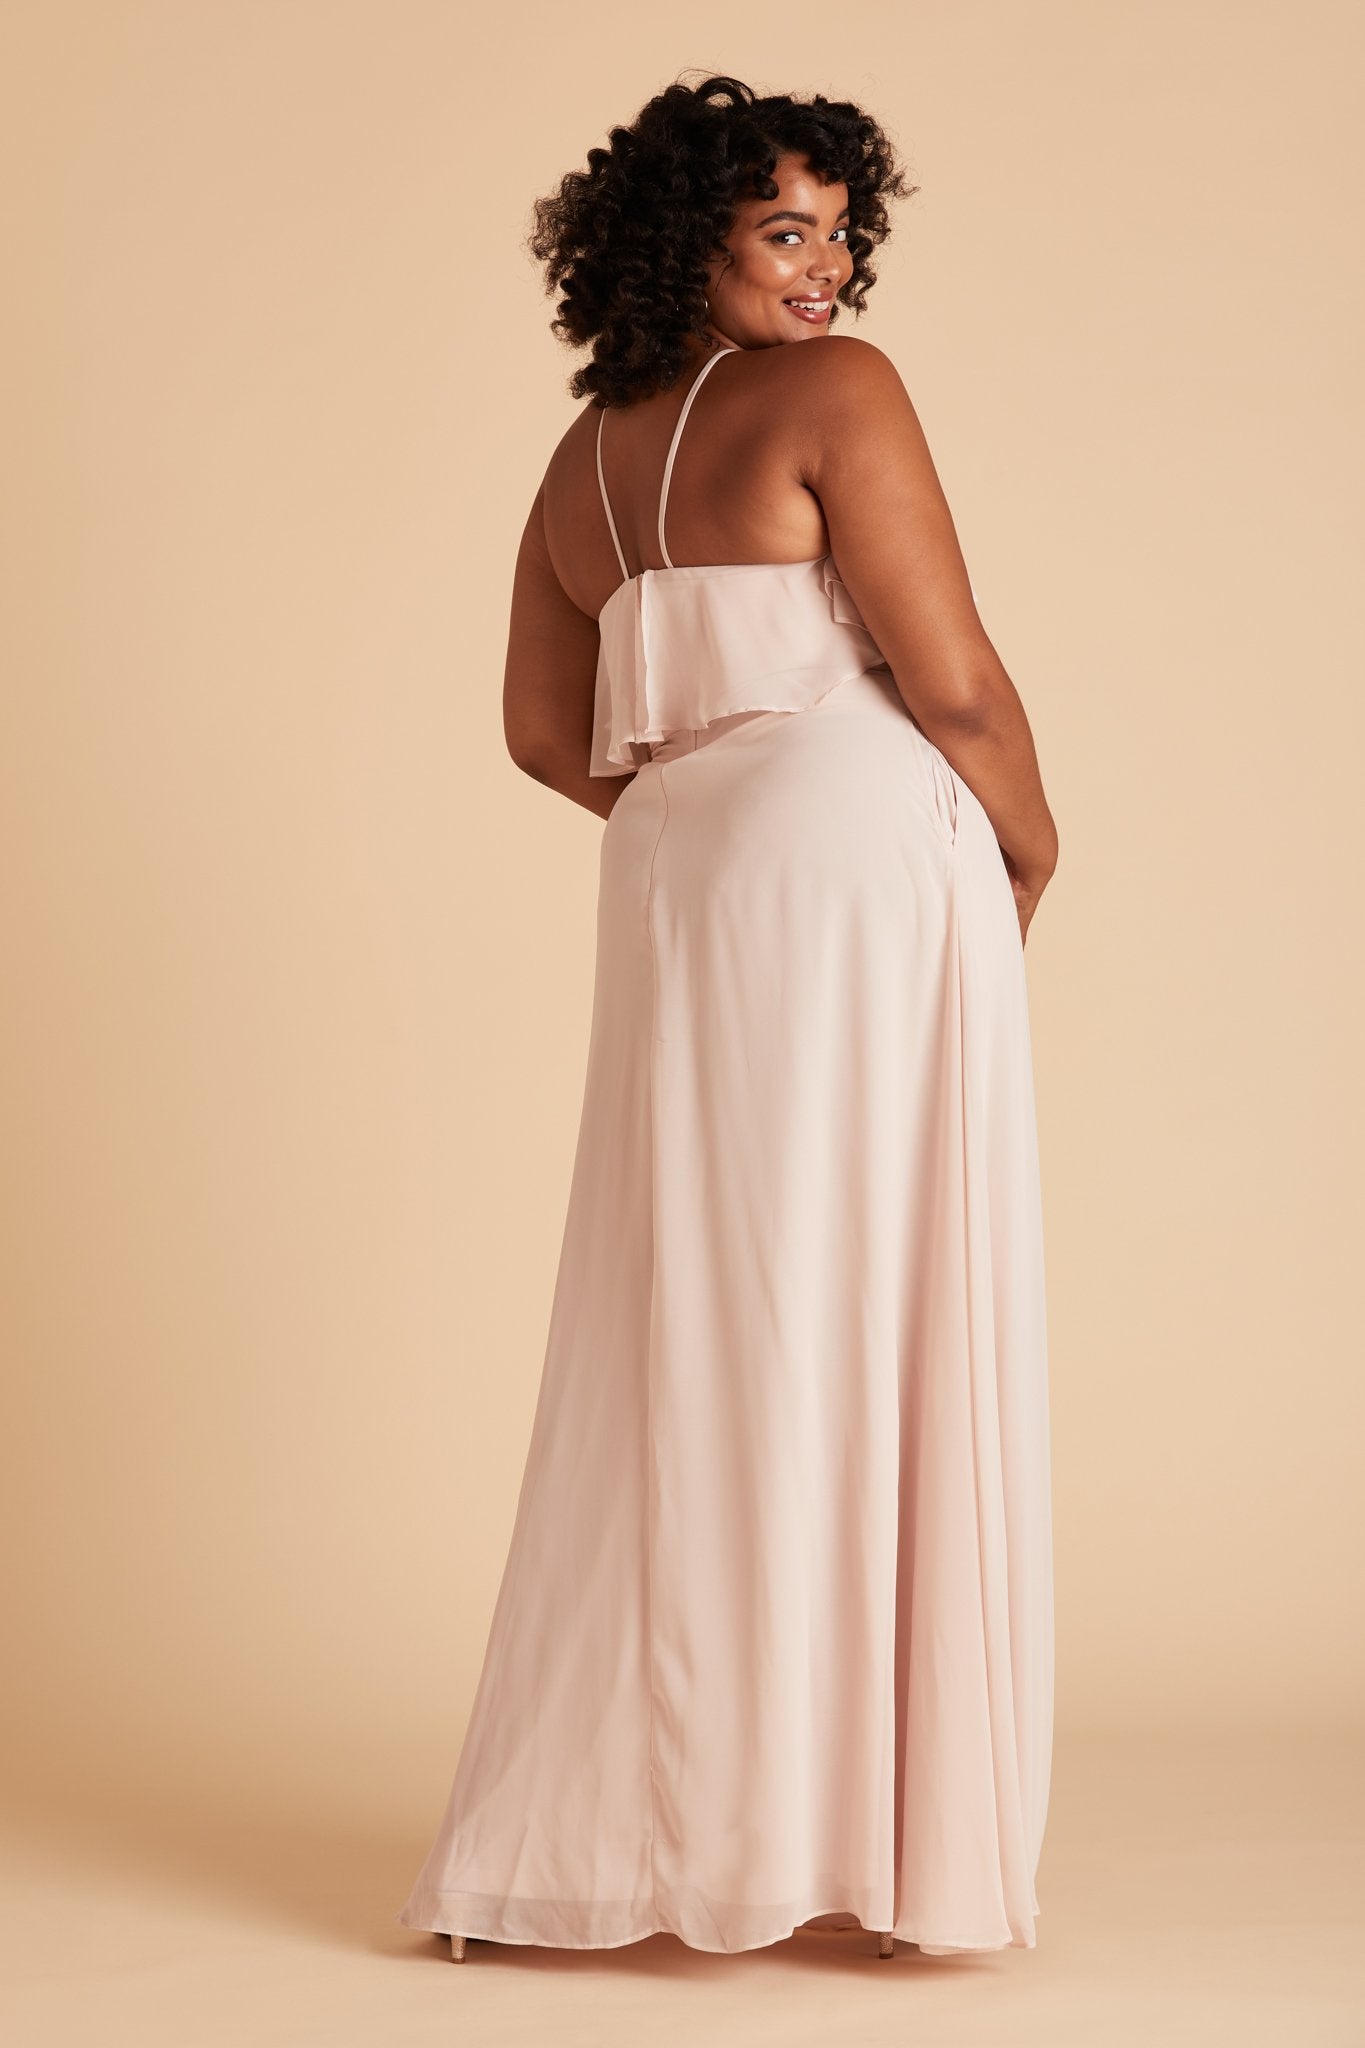 Jules plus size bridesmaid dress in pale blush chiffon by Birdy Grey, back view